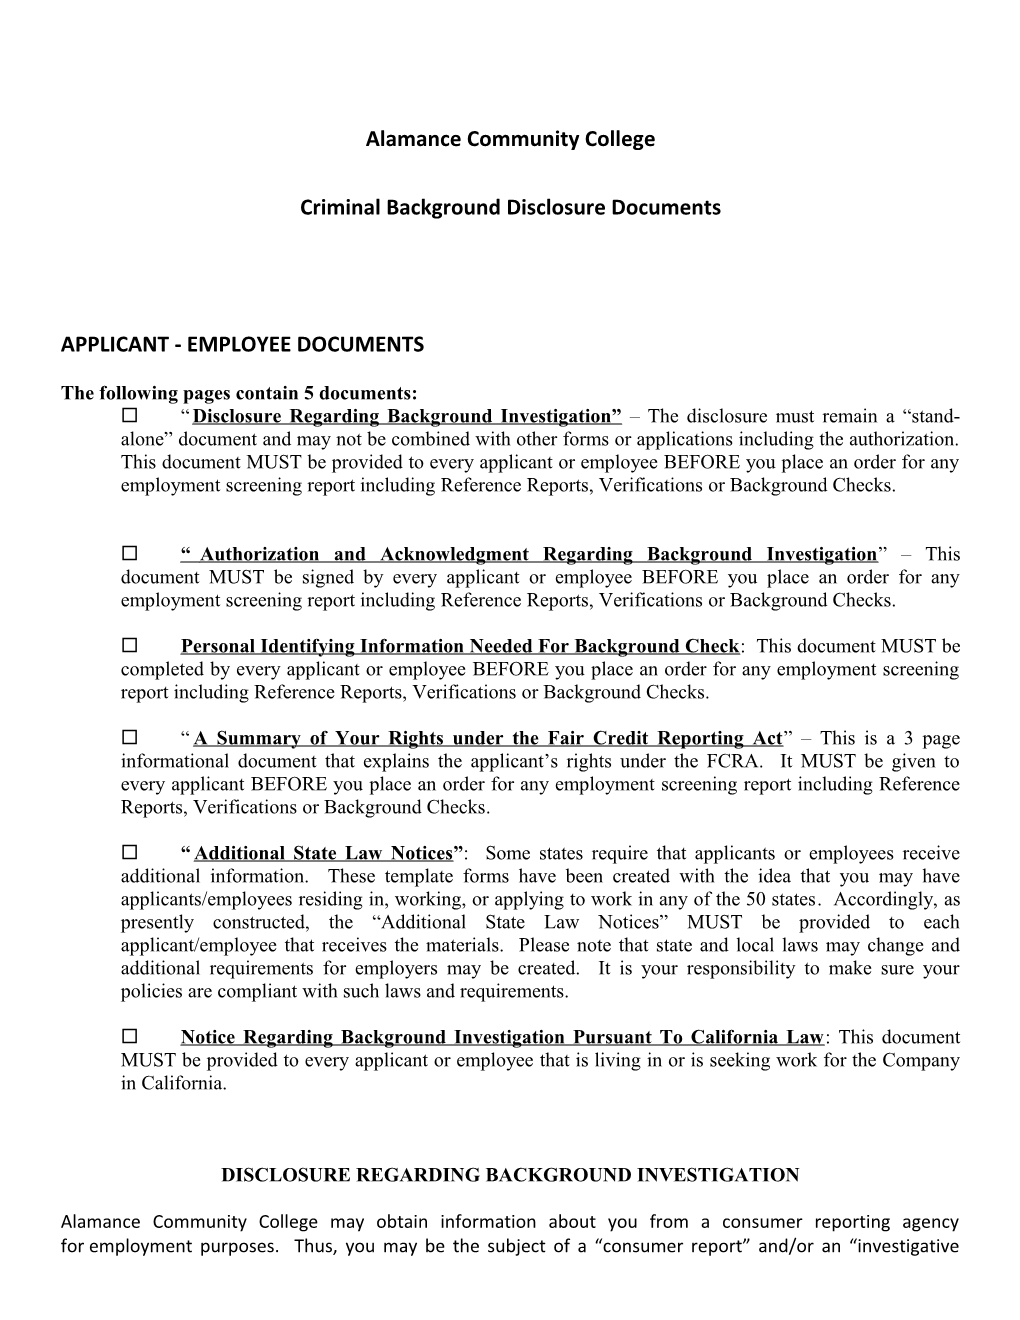 Disclosure & Authorization (DRS Redlines) (01233695)